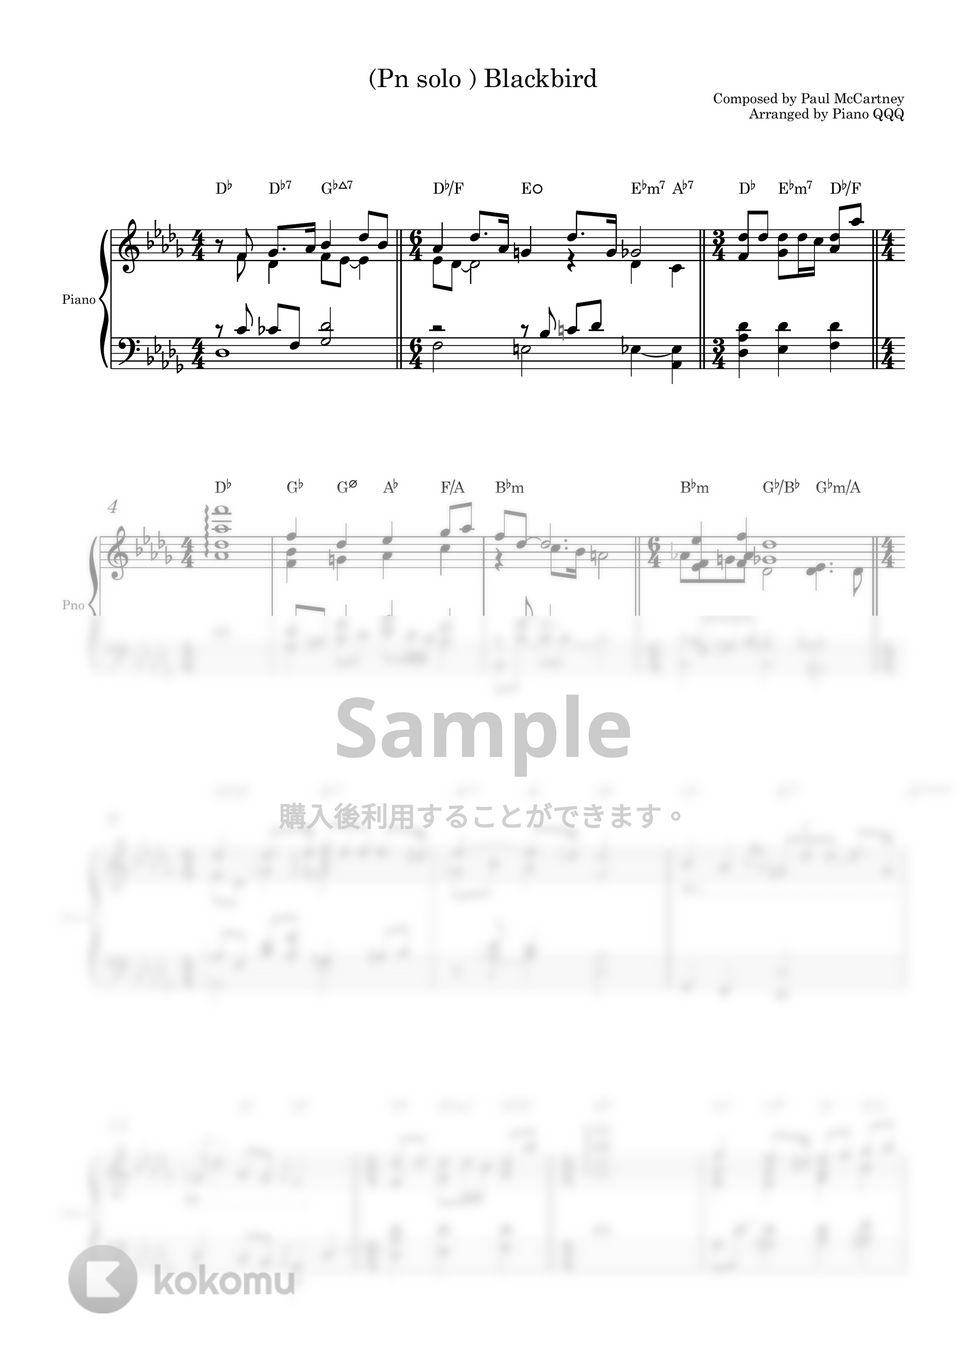 Paul McCartney - Blackbird (ピアノソロ) by Piano QQQ